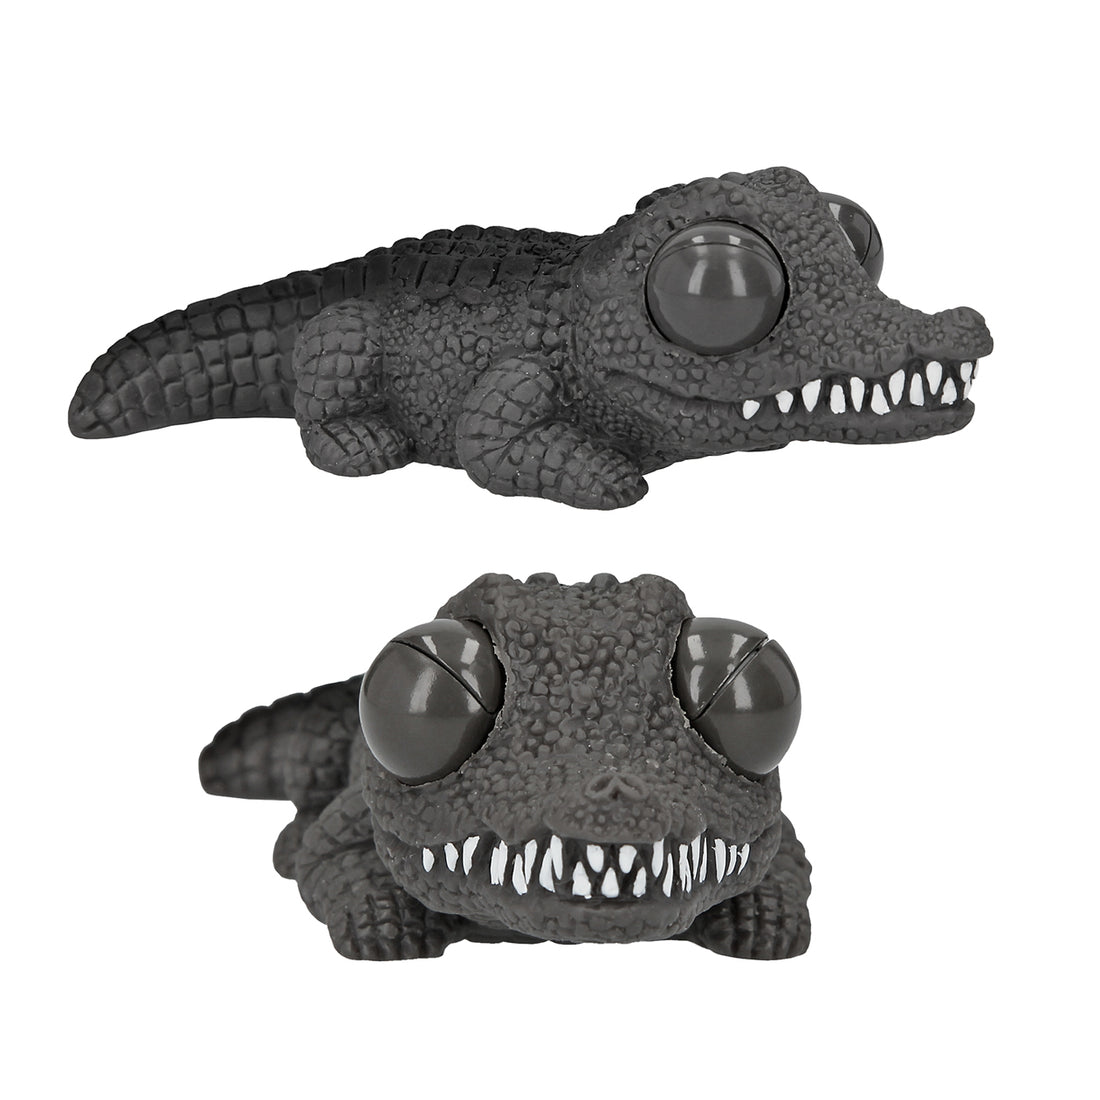 depesche-dino-world-pop-up-eye-crocodile- (2)